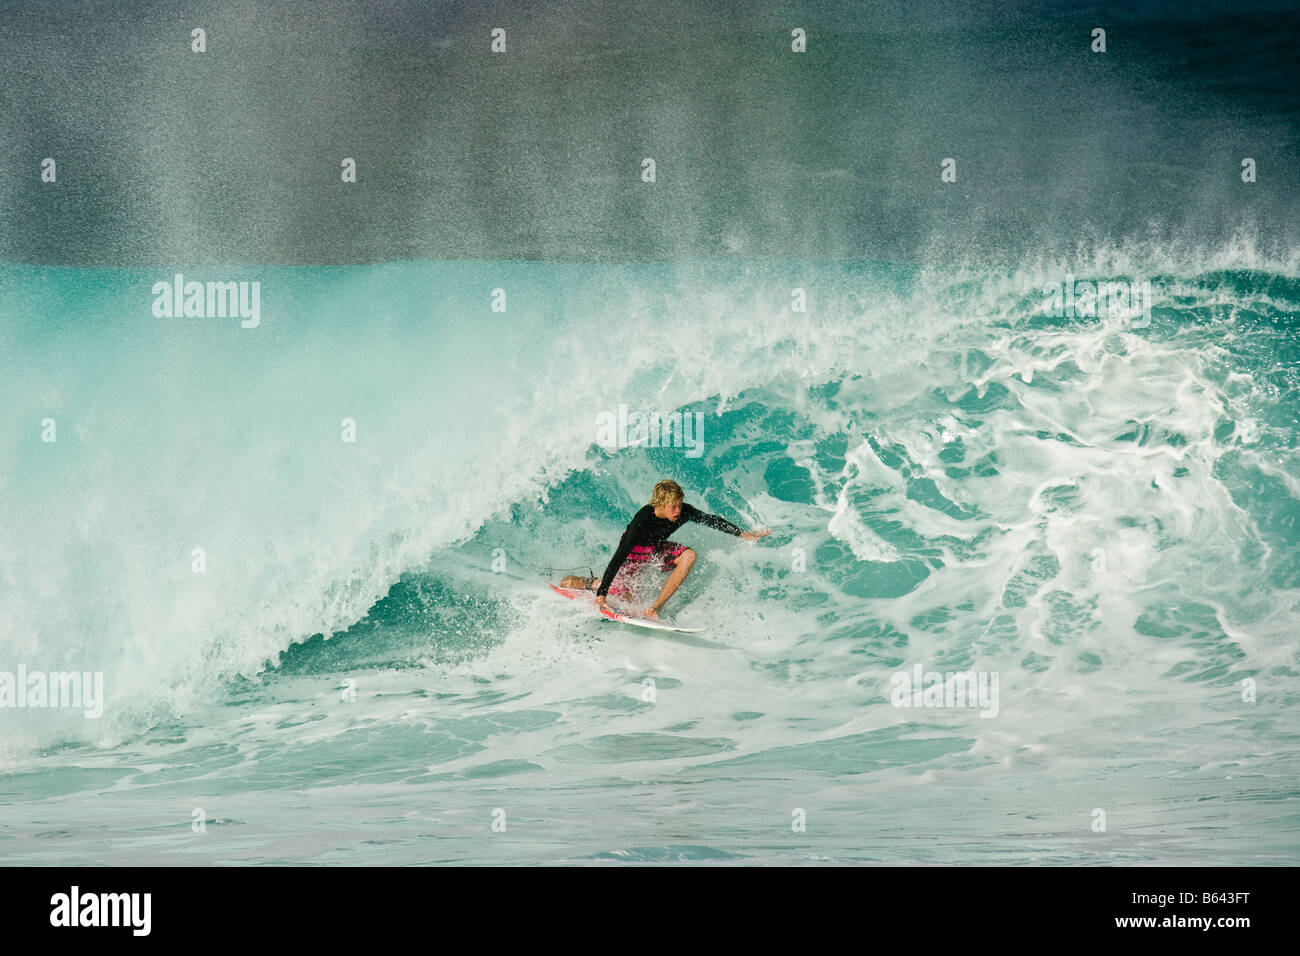 Surfer riding enorme ondata, Pipeline, North Shore Oahu, Hawaii Foto Stock